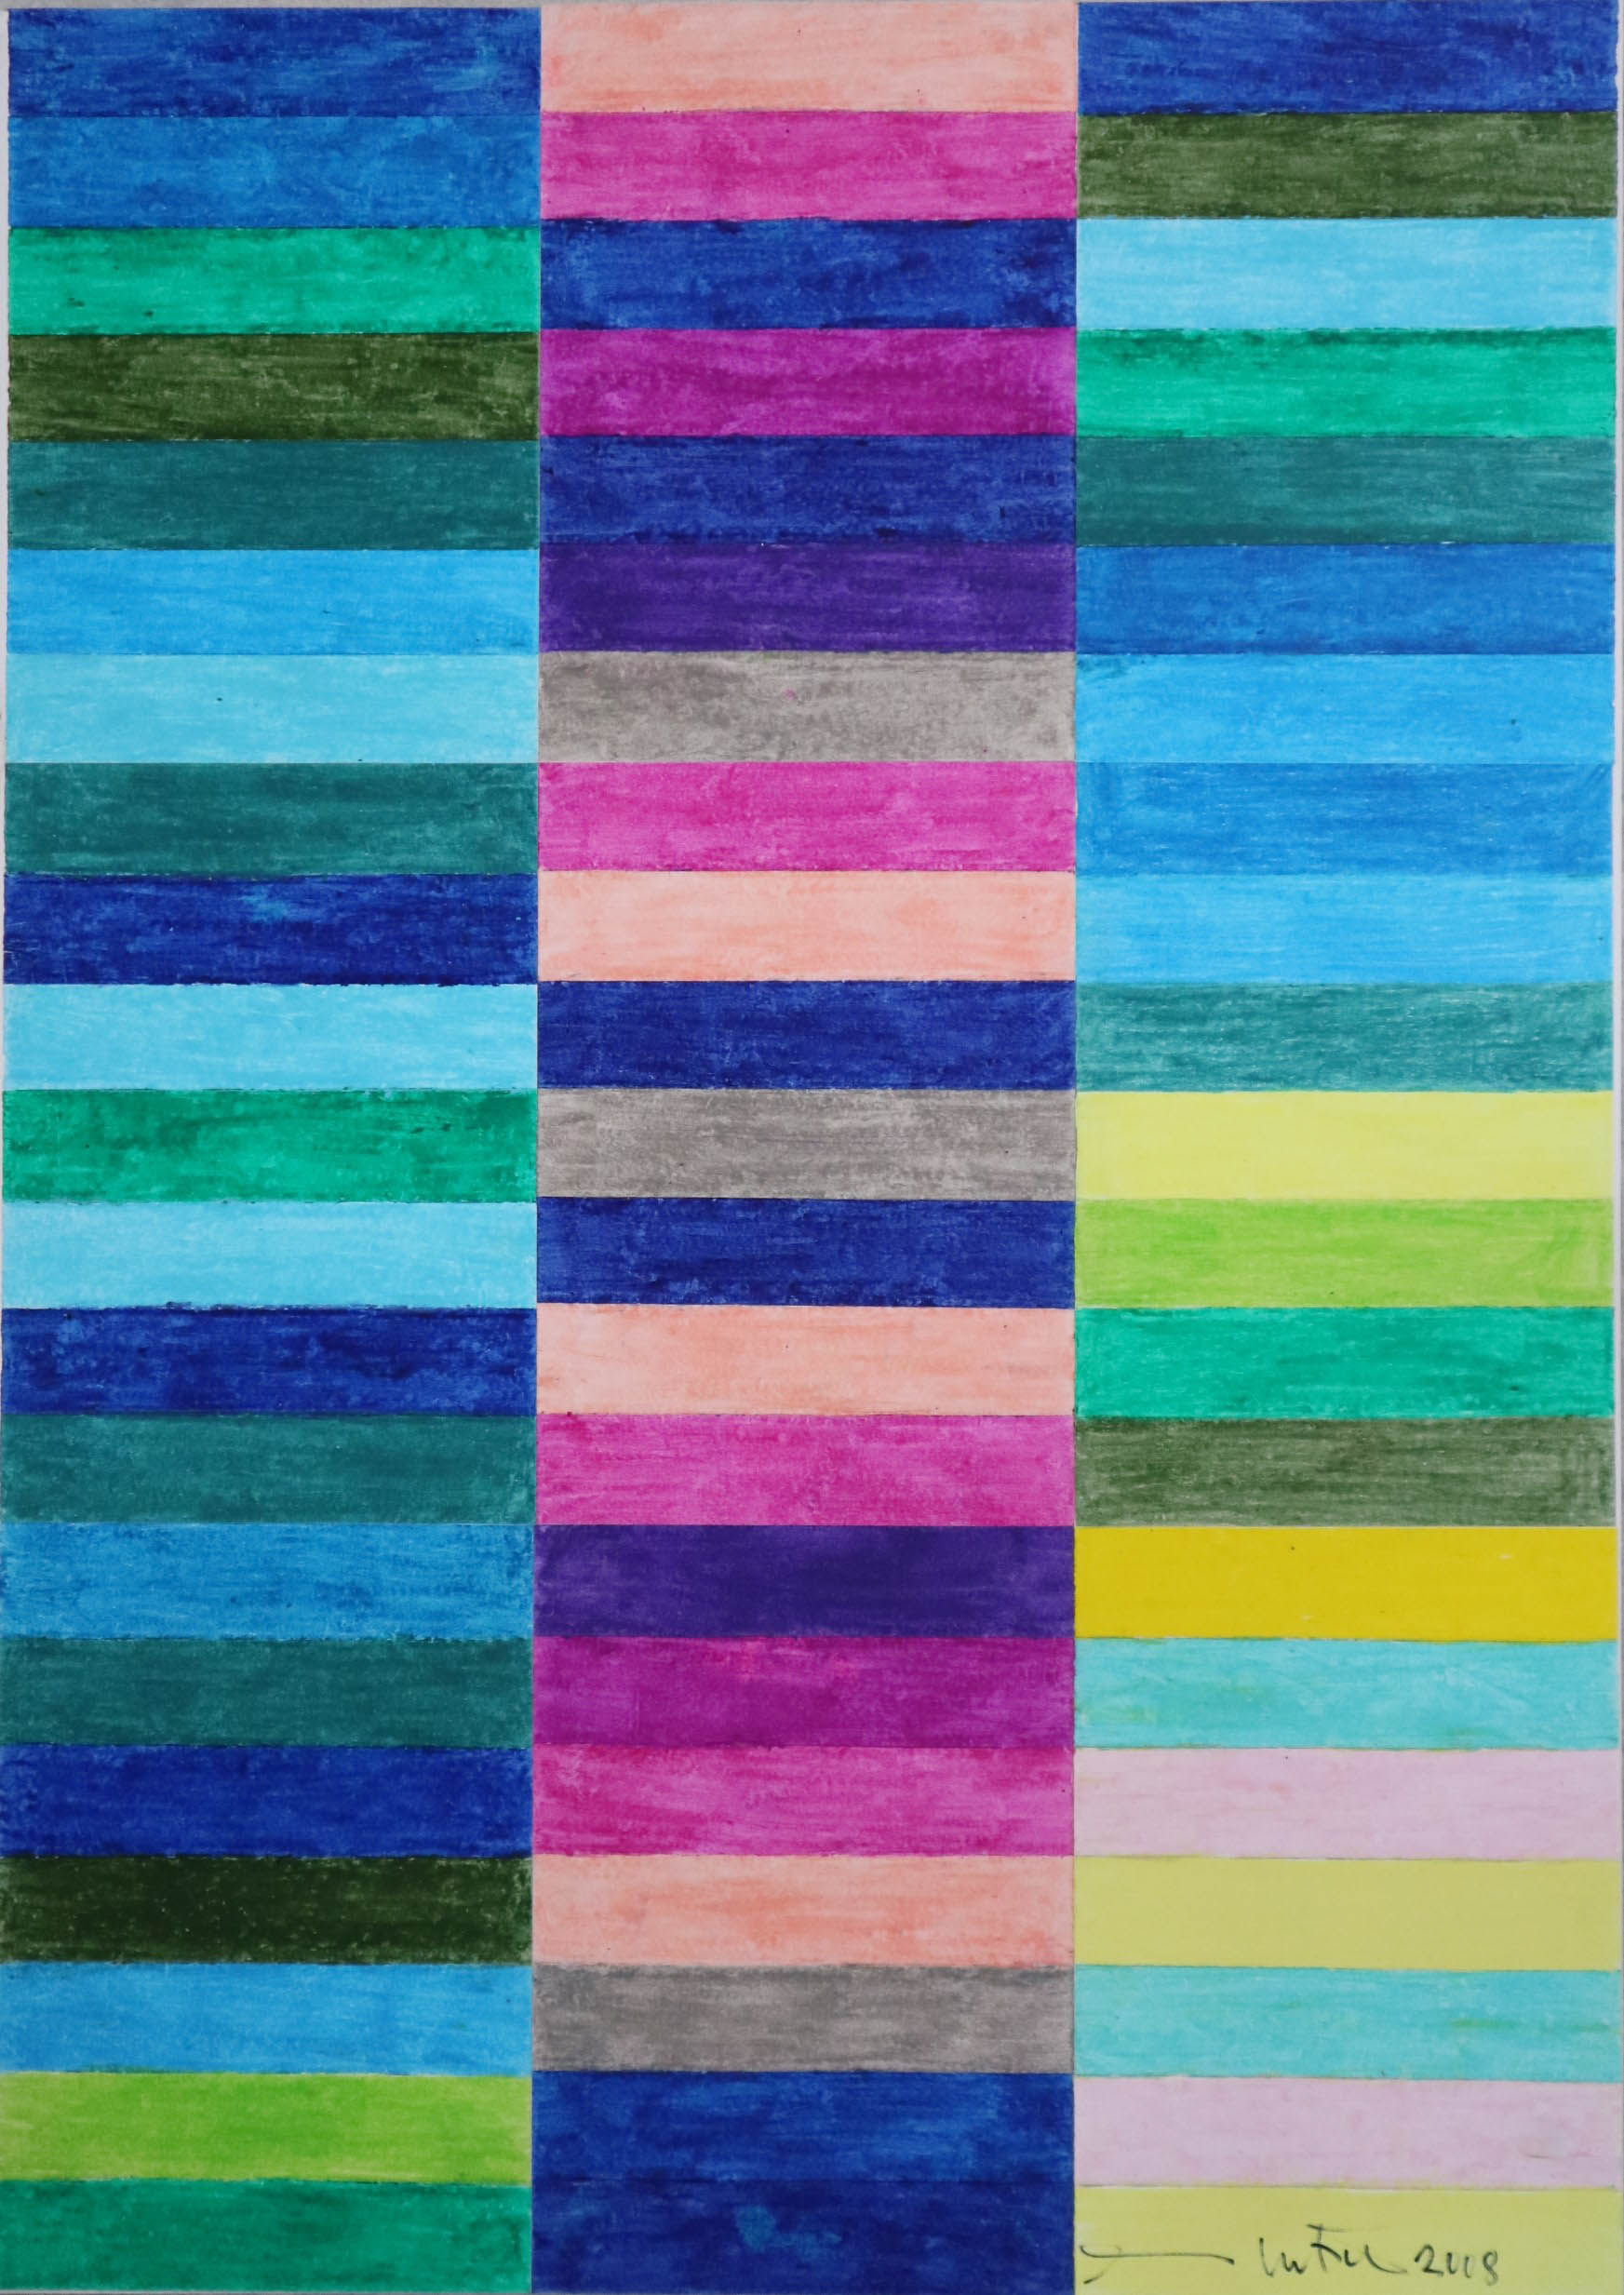 Teoria dei colori 20 (disegno) di Nitsch, Hermann - Fondazione Morra (sec. XXI)